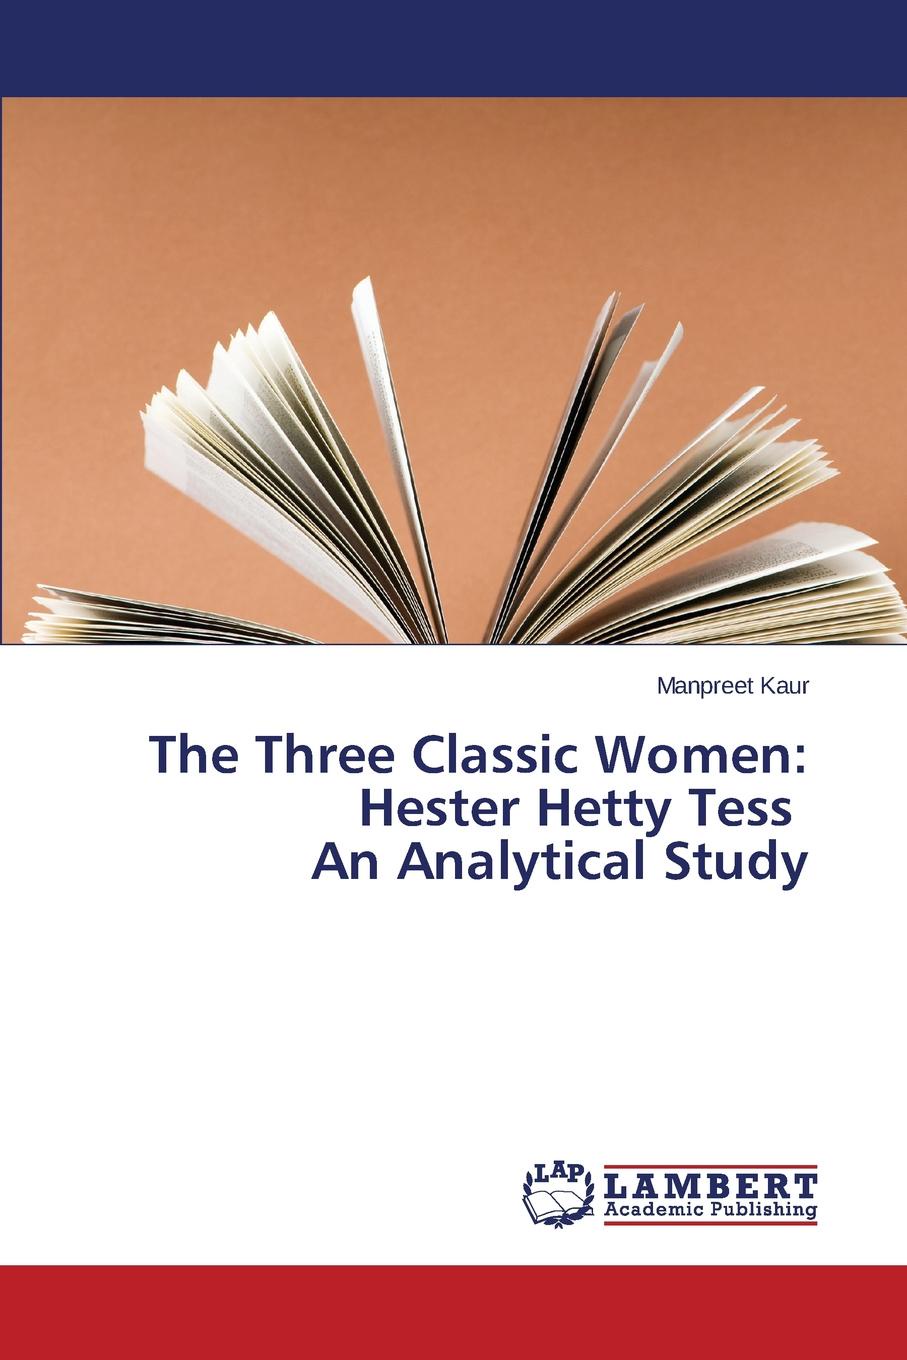 The Three Classic Women. Hester Hetty Tess An Analytical Study